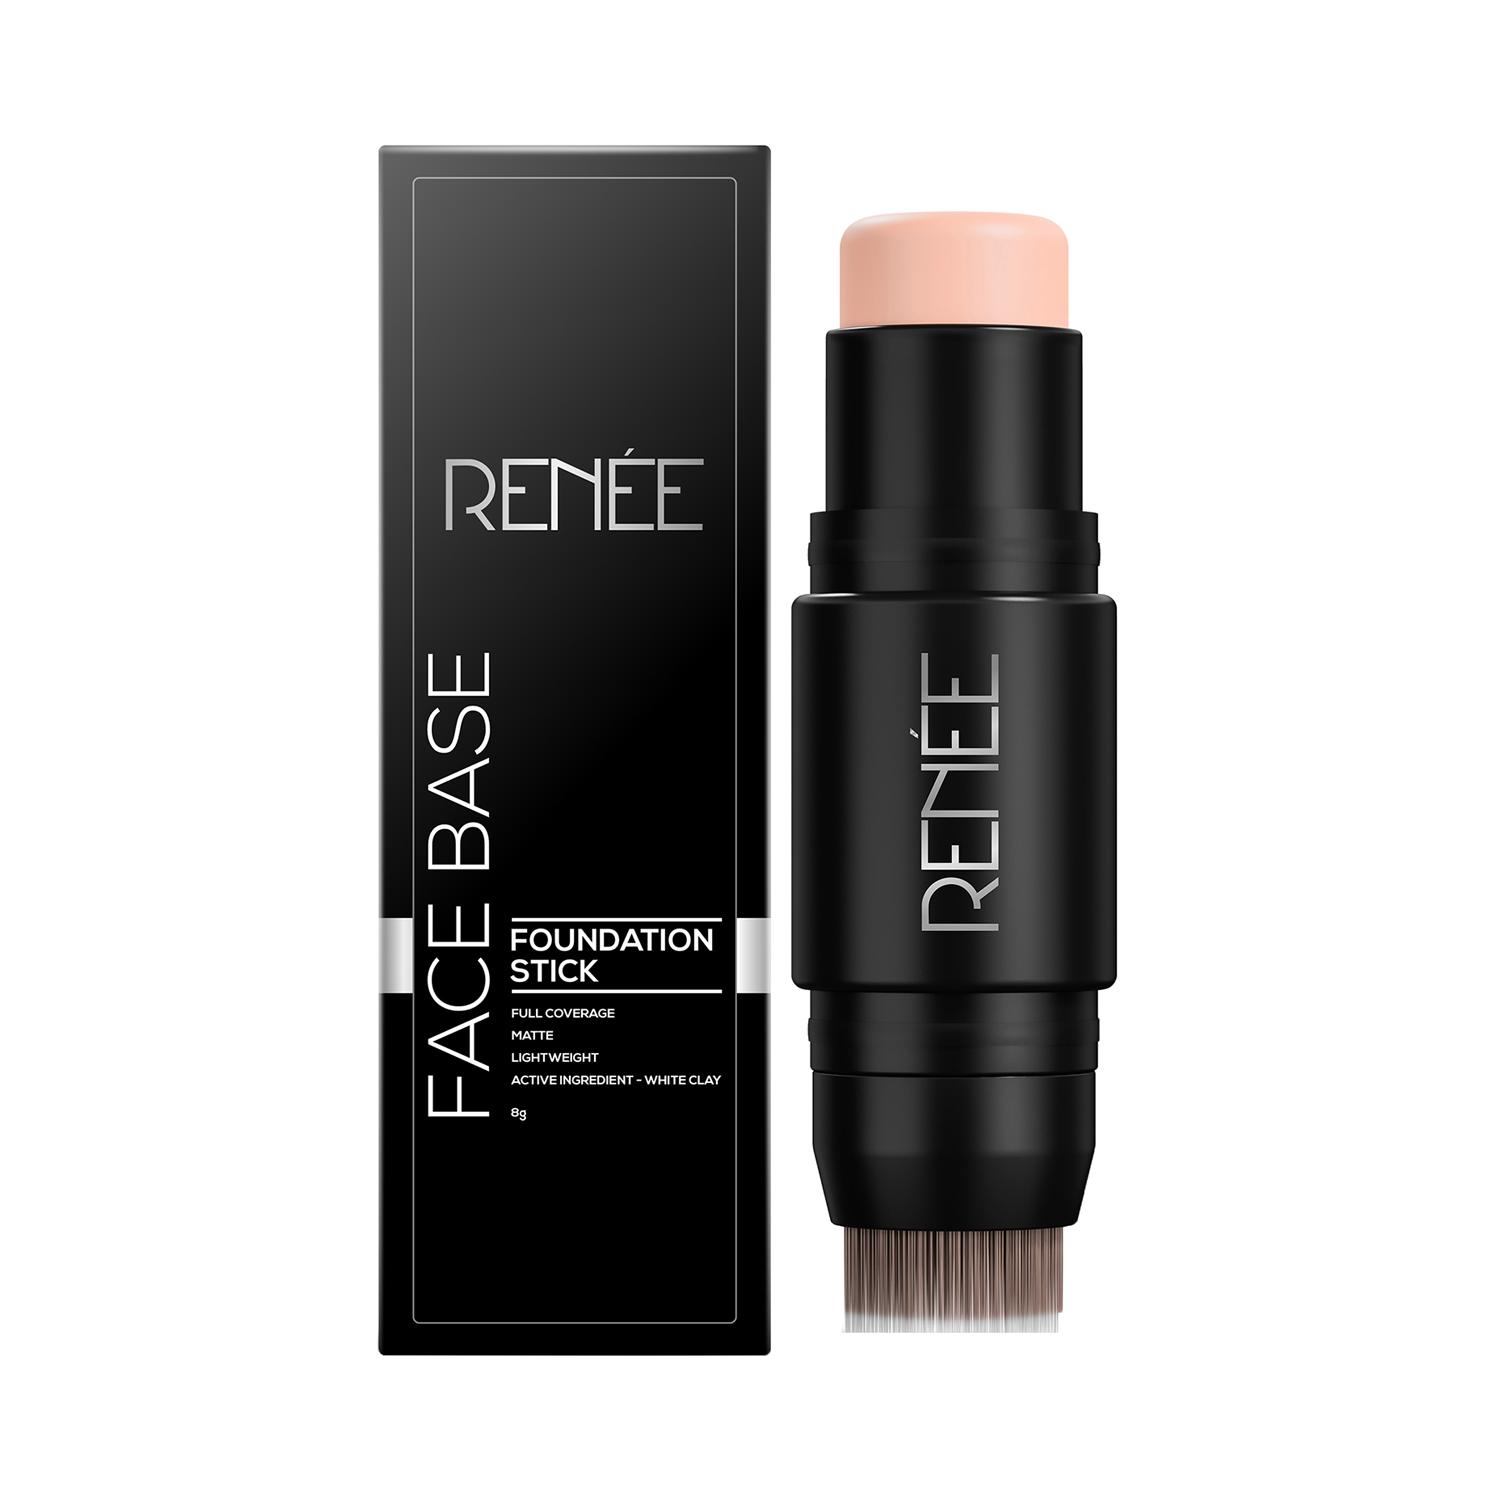 renee face base foundation stick - frappe (8g)